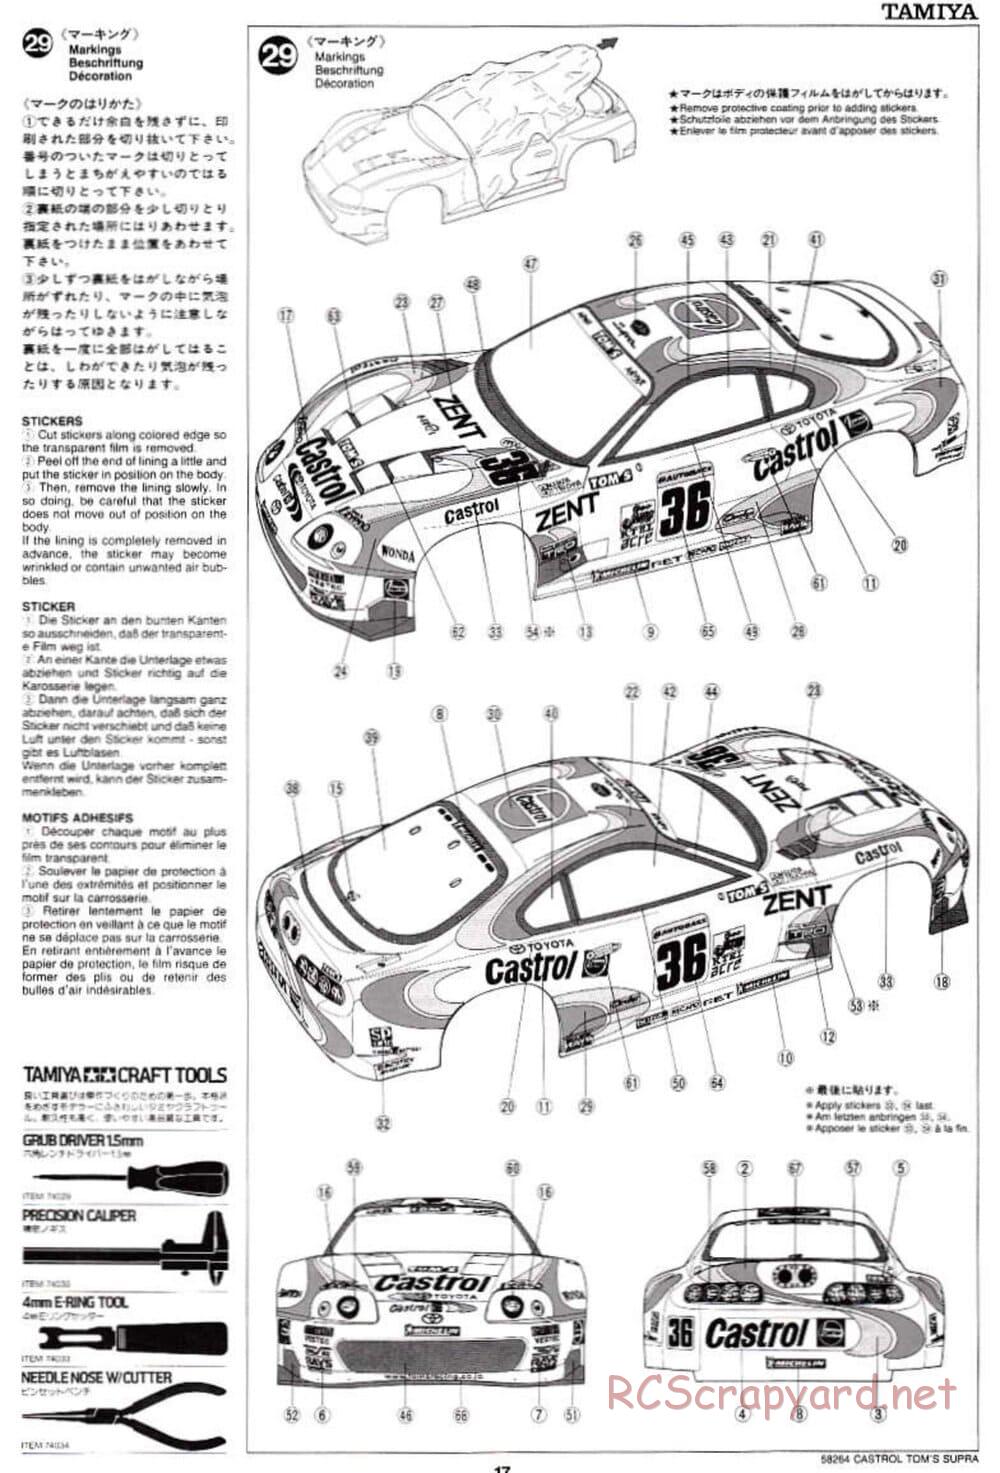 Tamiya - Castrol Tom's Supra 2000 - TL-01 Chassis - Manual - Page 17